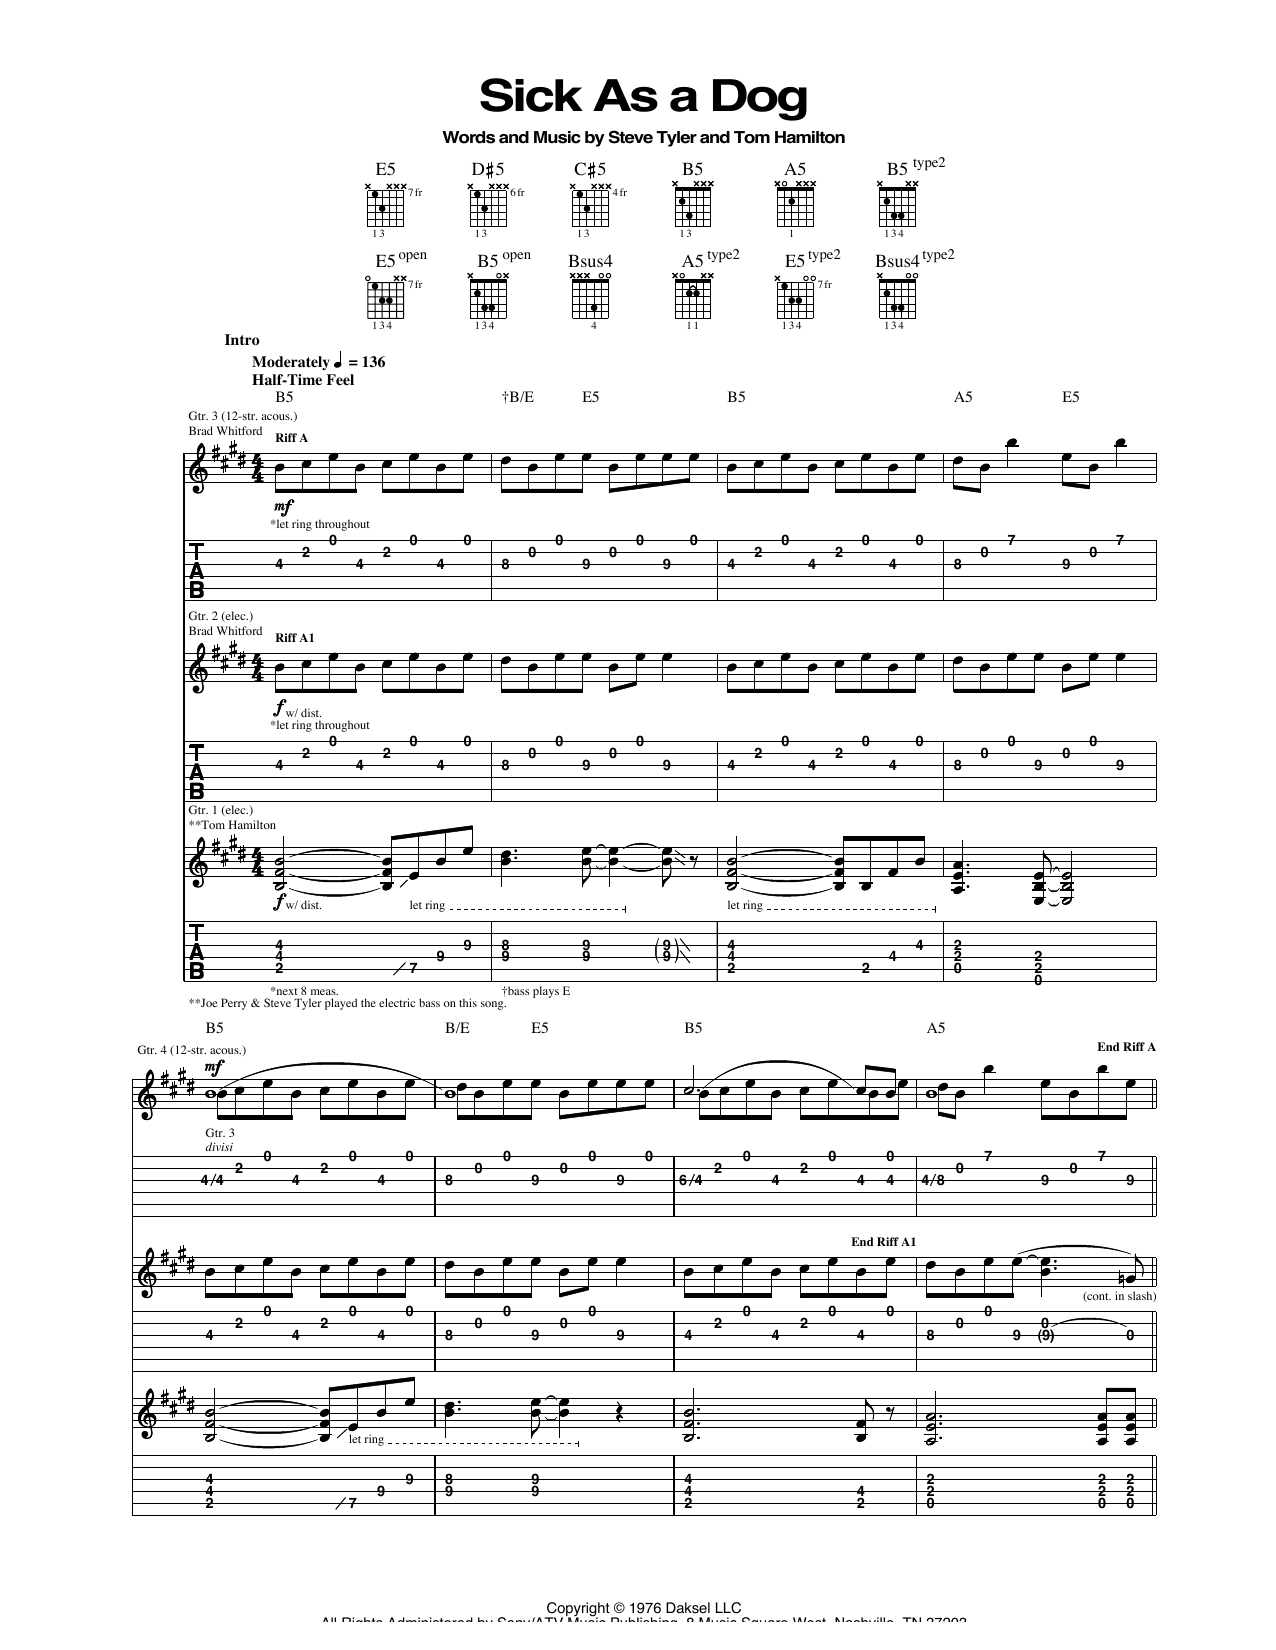 Aerosmith Sick As A Dog Sheet Music Notes & Chords for Guitar Tab - Download or Print PDF